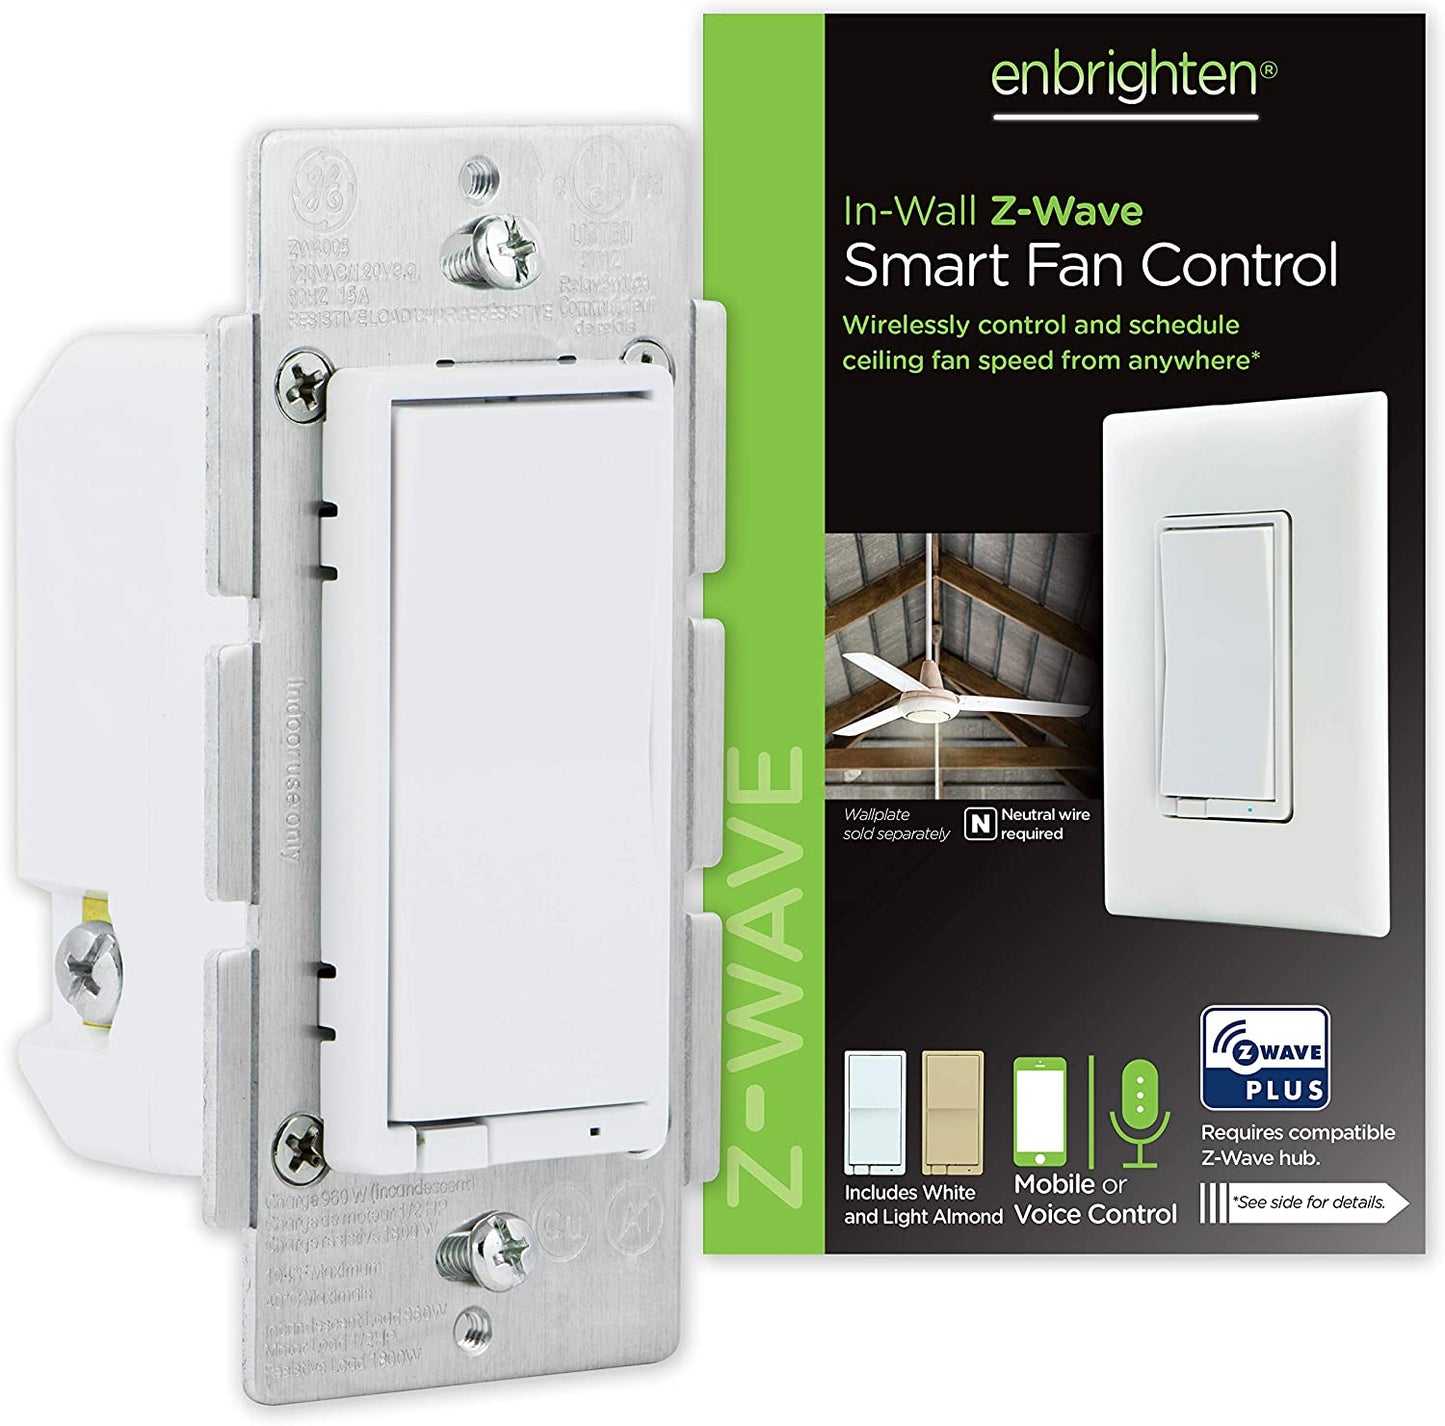 GE Enbrighten In-Wall Z-Wave Plus Smart Fan Control with SmartStart and S2 Security - 55258